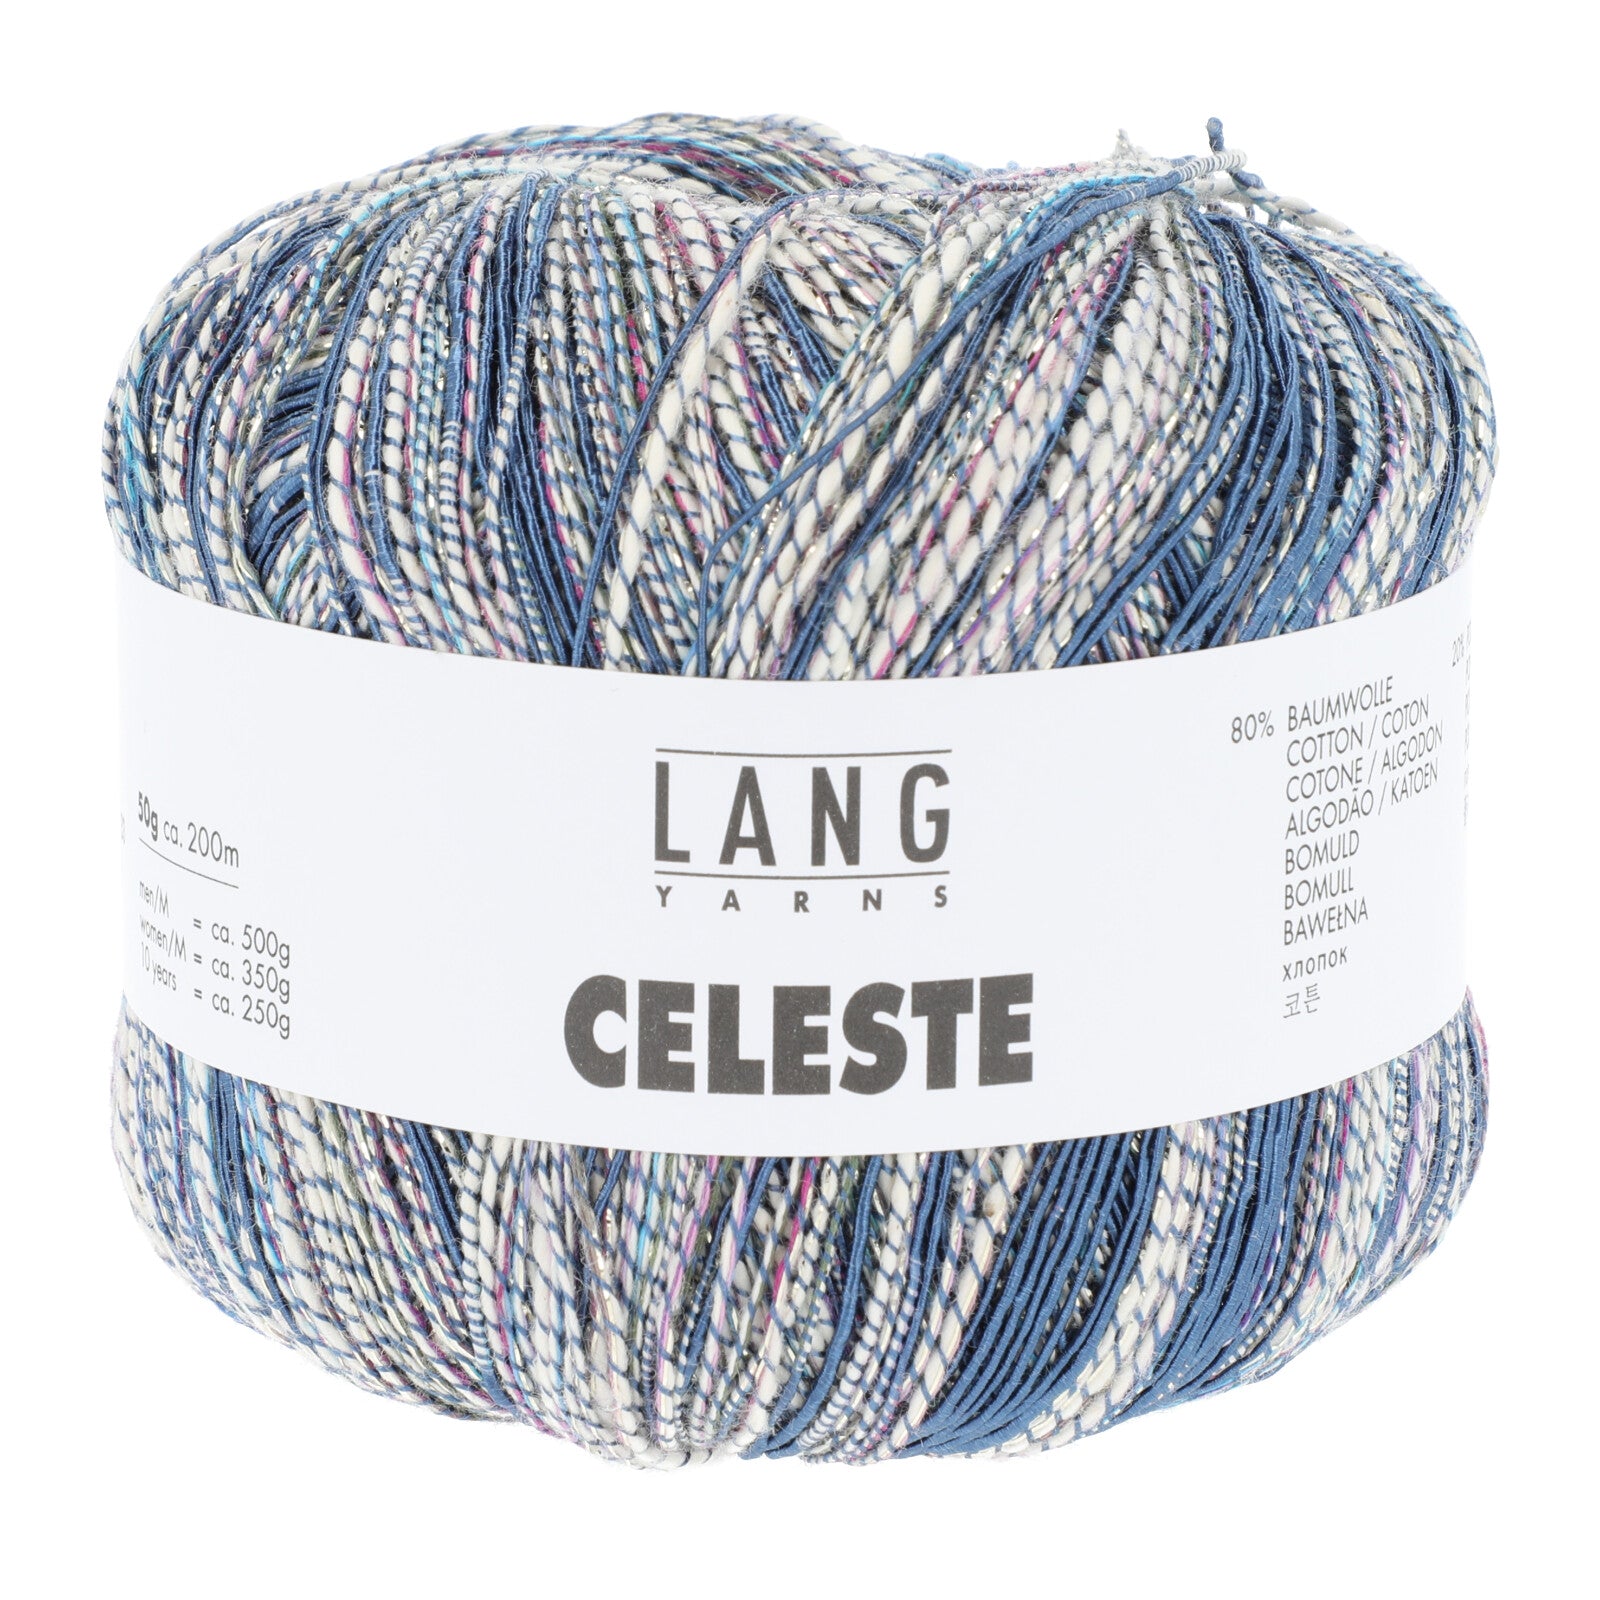 Lang Yarns Celeste yarn color 34